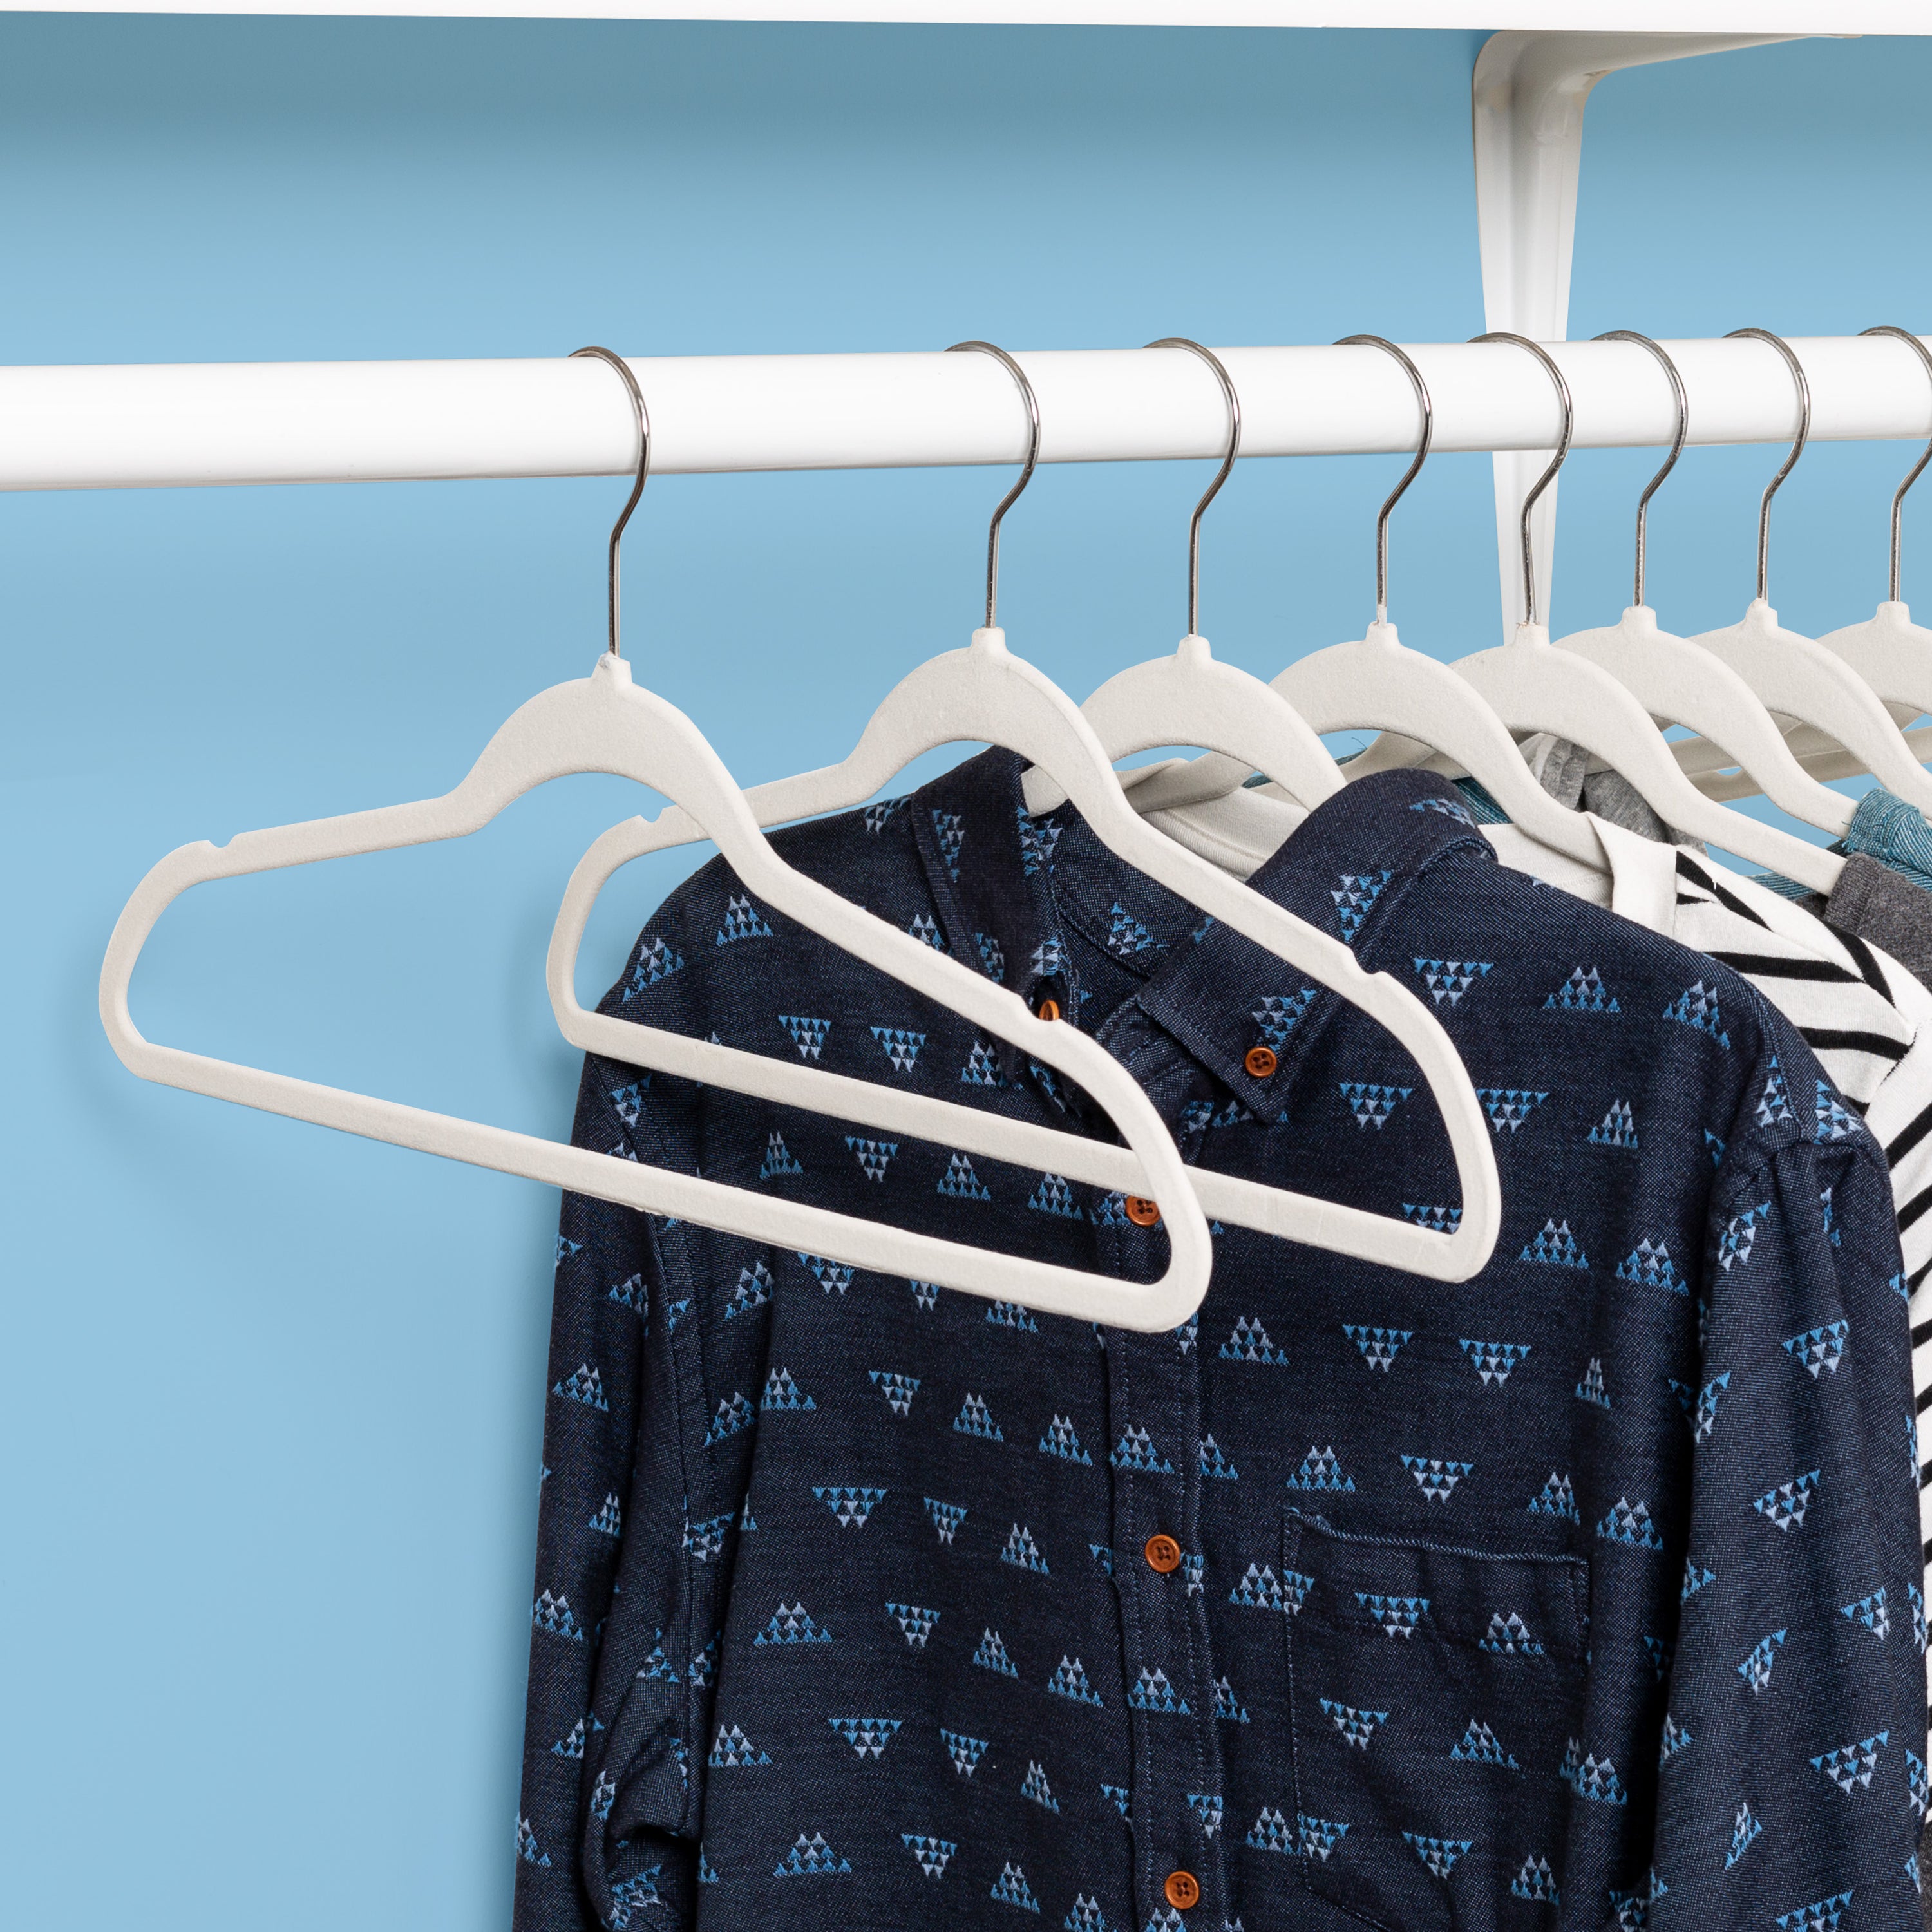 50 Pack Velvet Clothes Hangers - Durable, Space Saving, Slip-Free